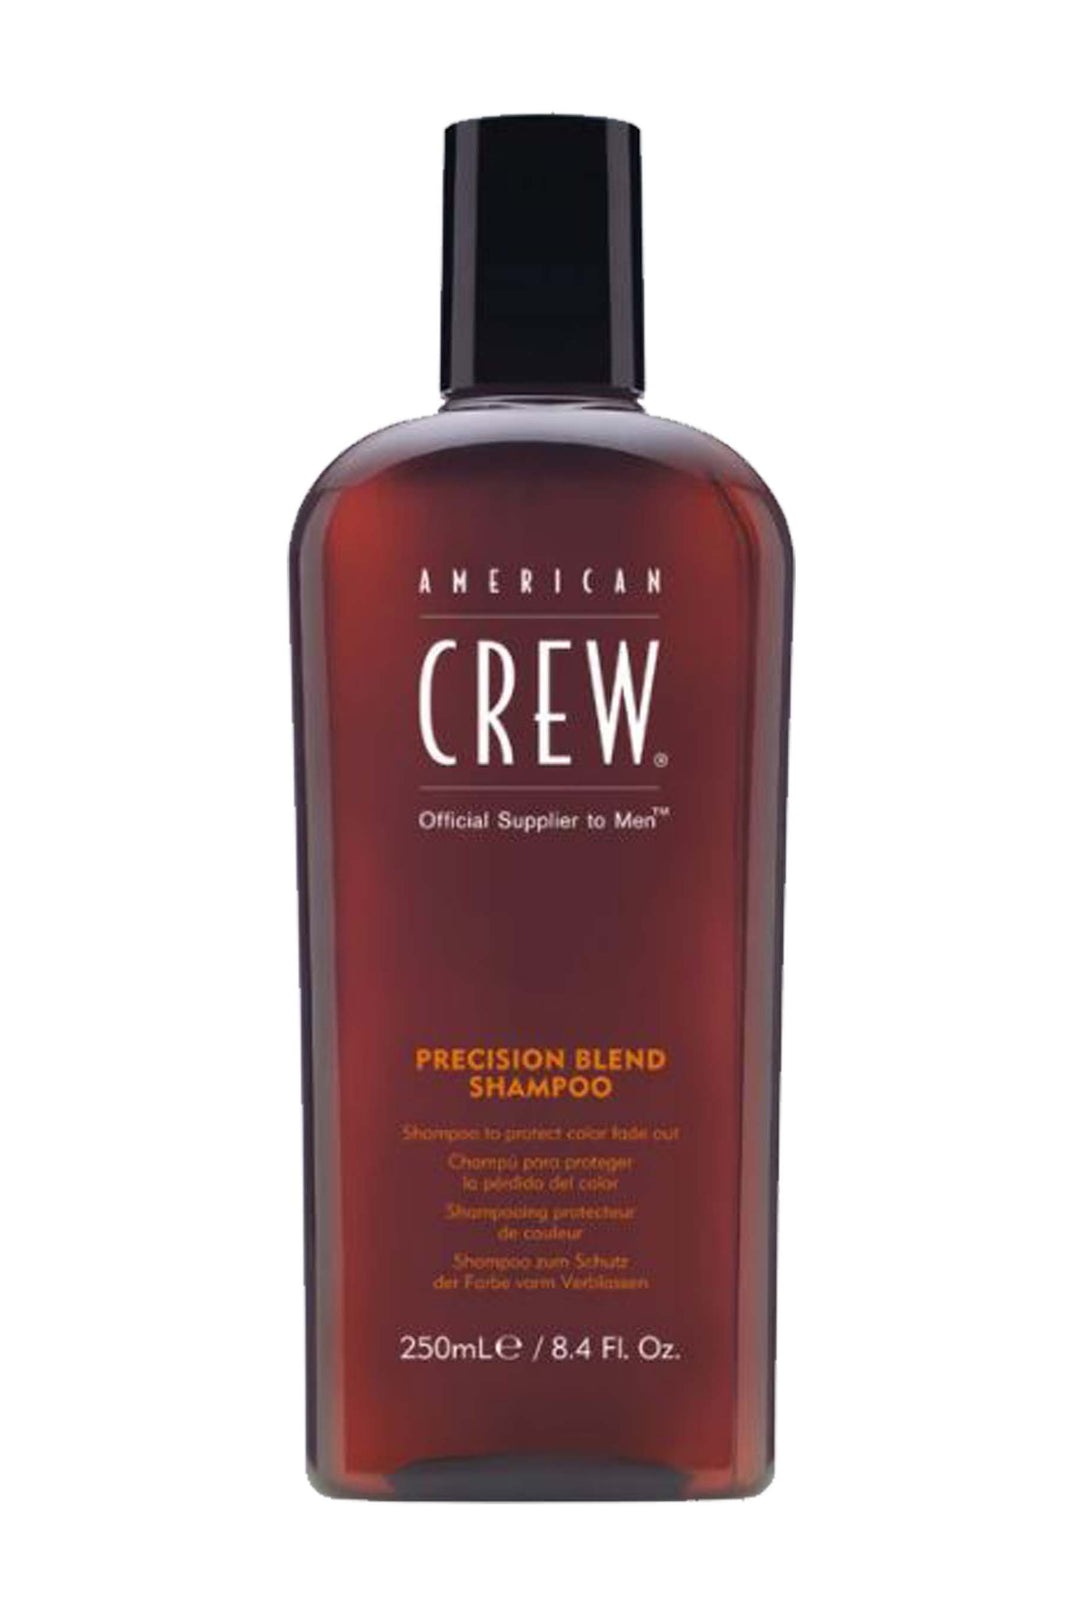 american-crew-precision-blend-shampoo-250ml